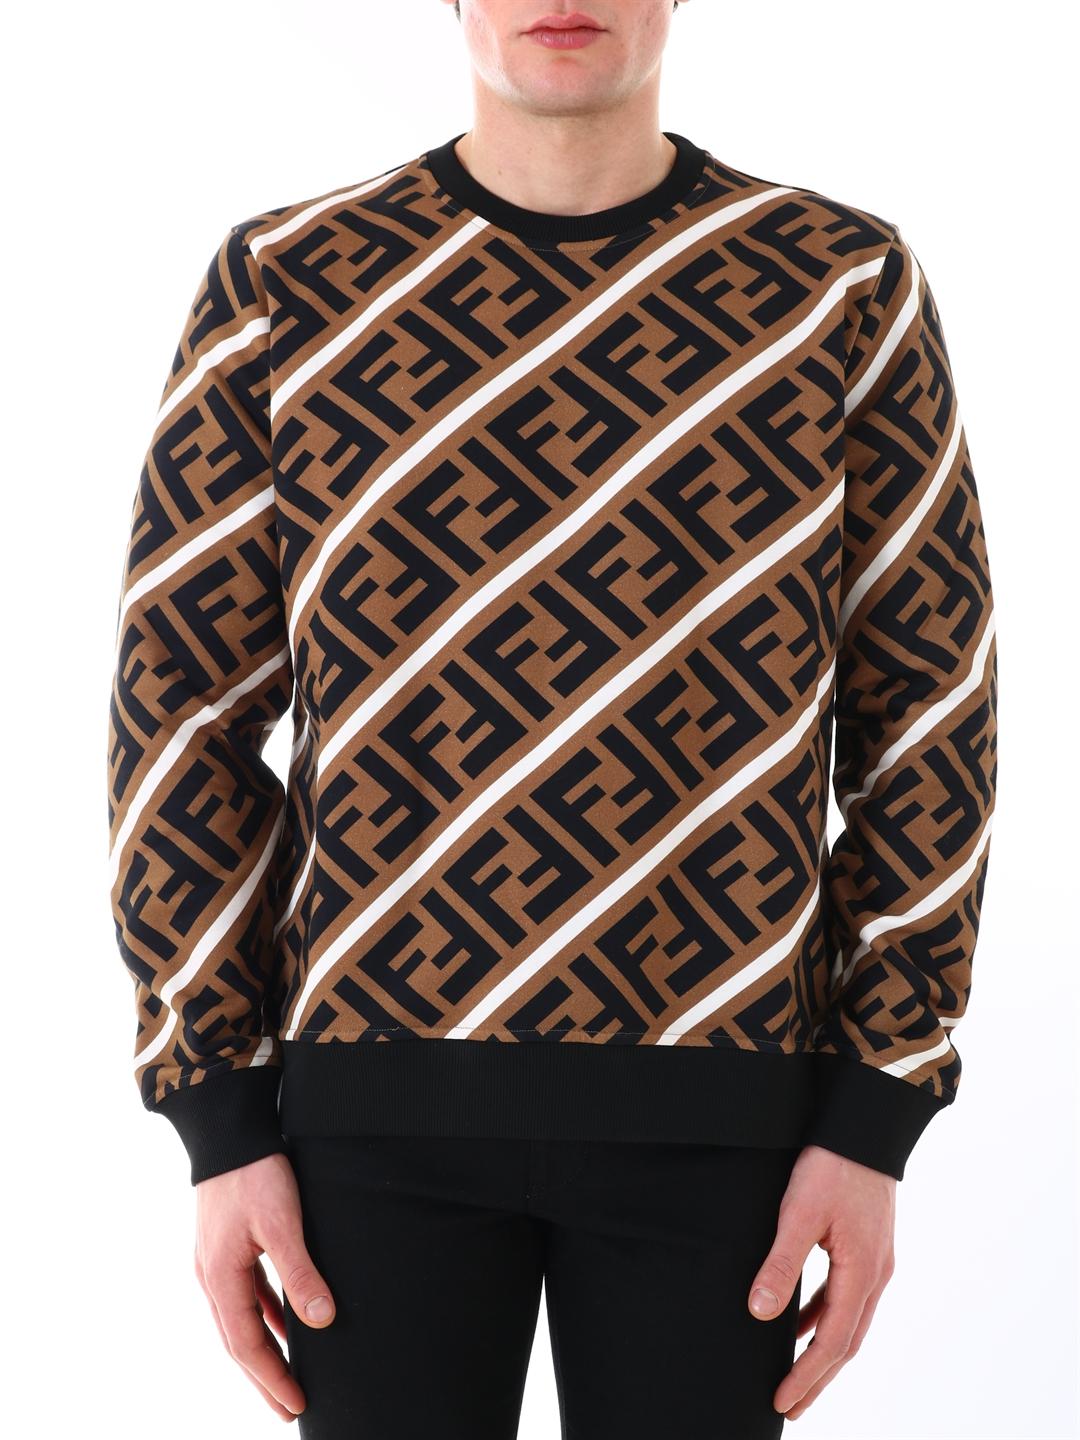 Fendi Sweatshirt Ff Logo in Natural for Men - Lyst